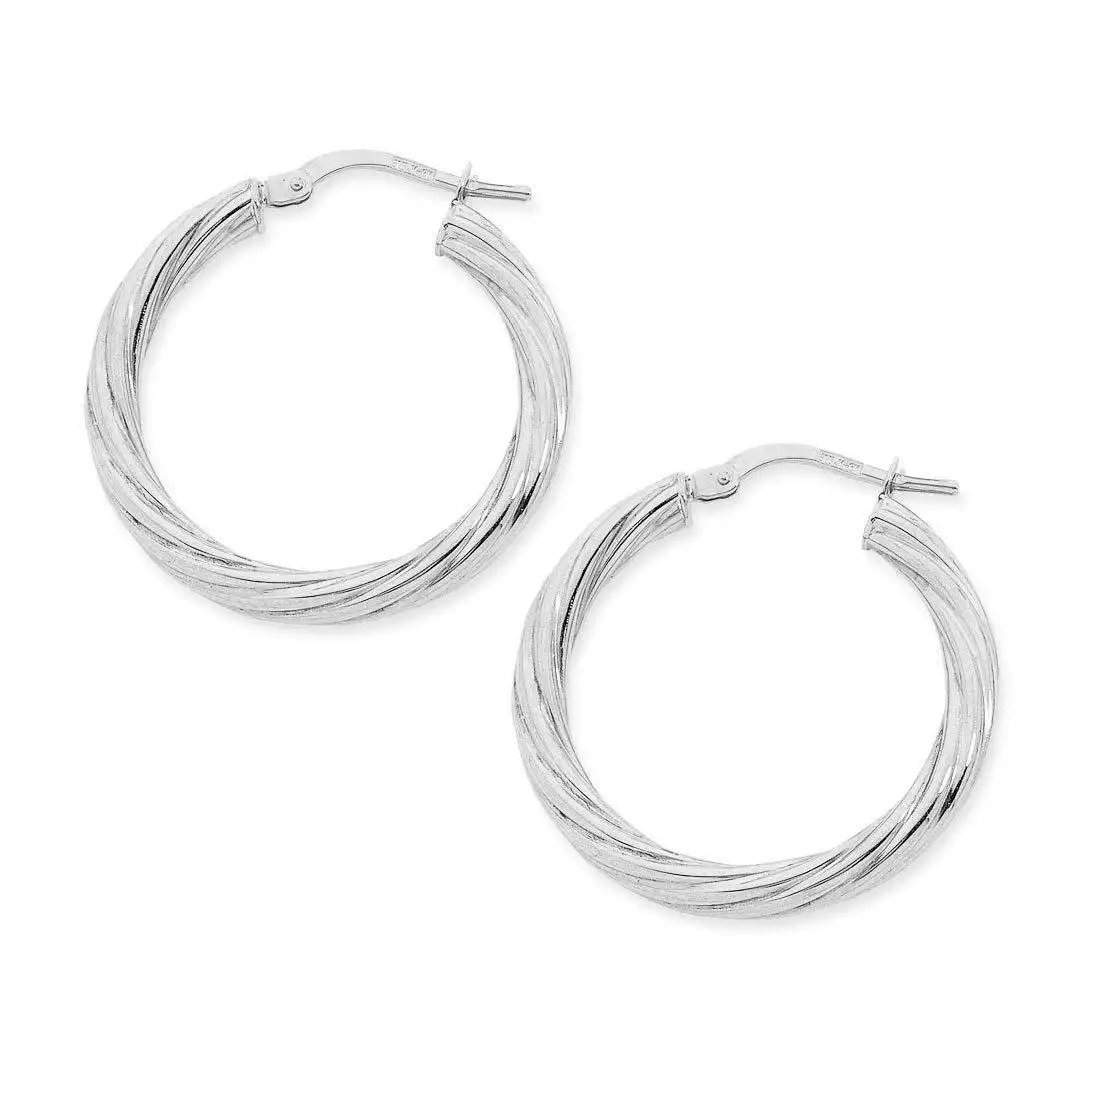 9ct White Gold Silver Infused Twist Hoop Earrings 2mm x 15mm